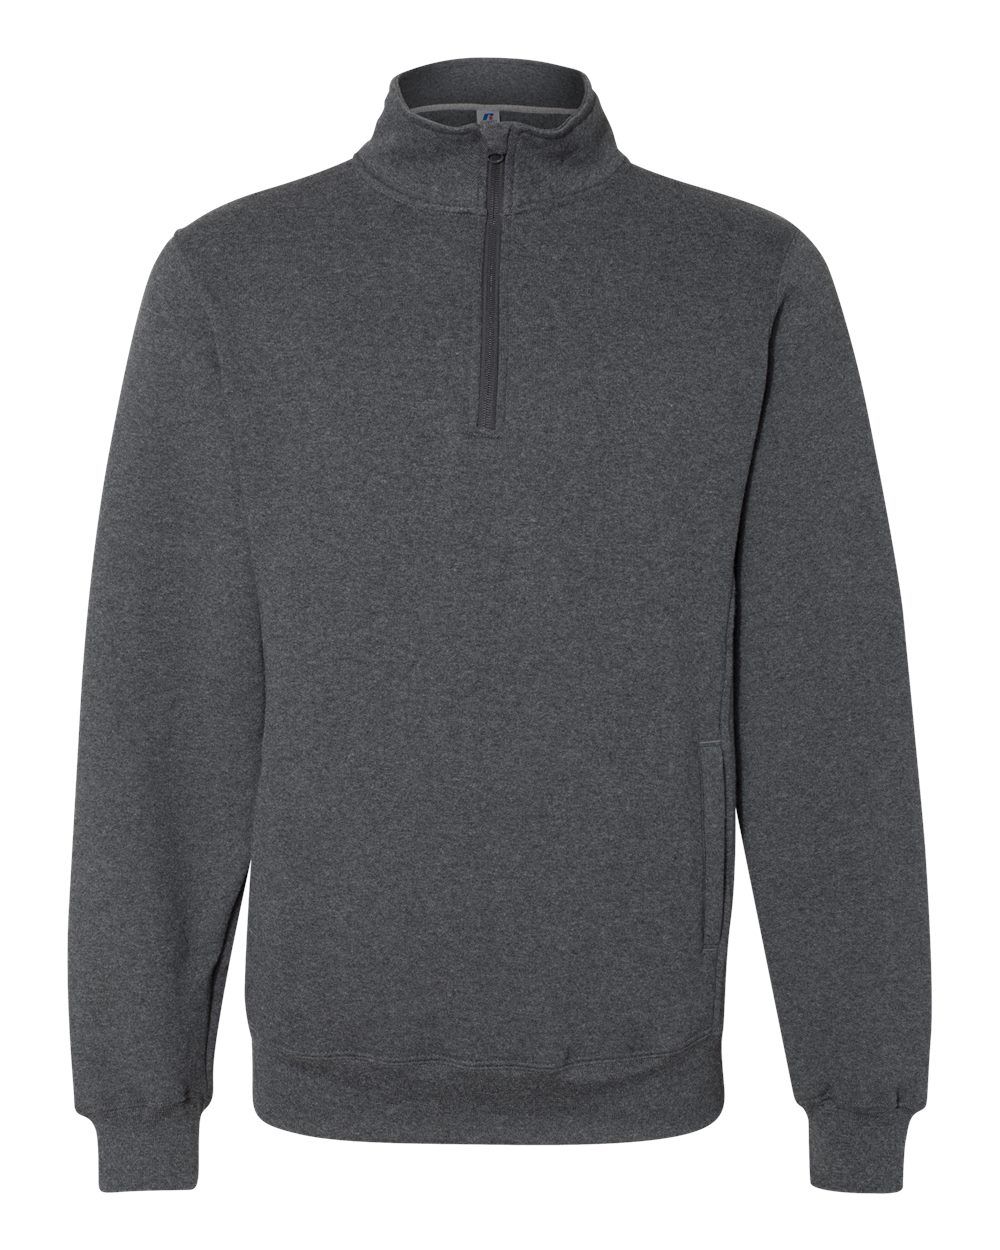 Relaxed Fit Graphic 1/4 Zip Sweatshirt - Grey